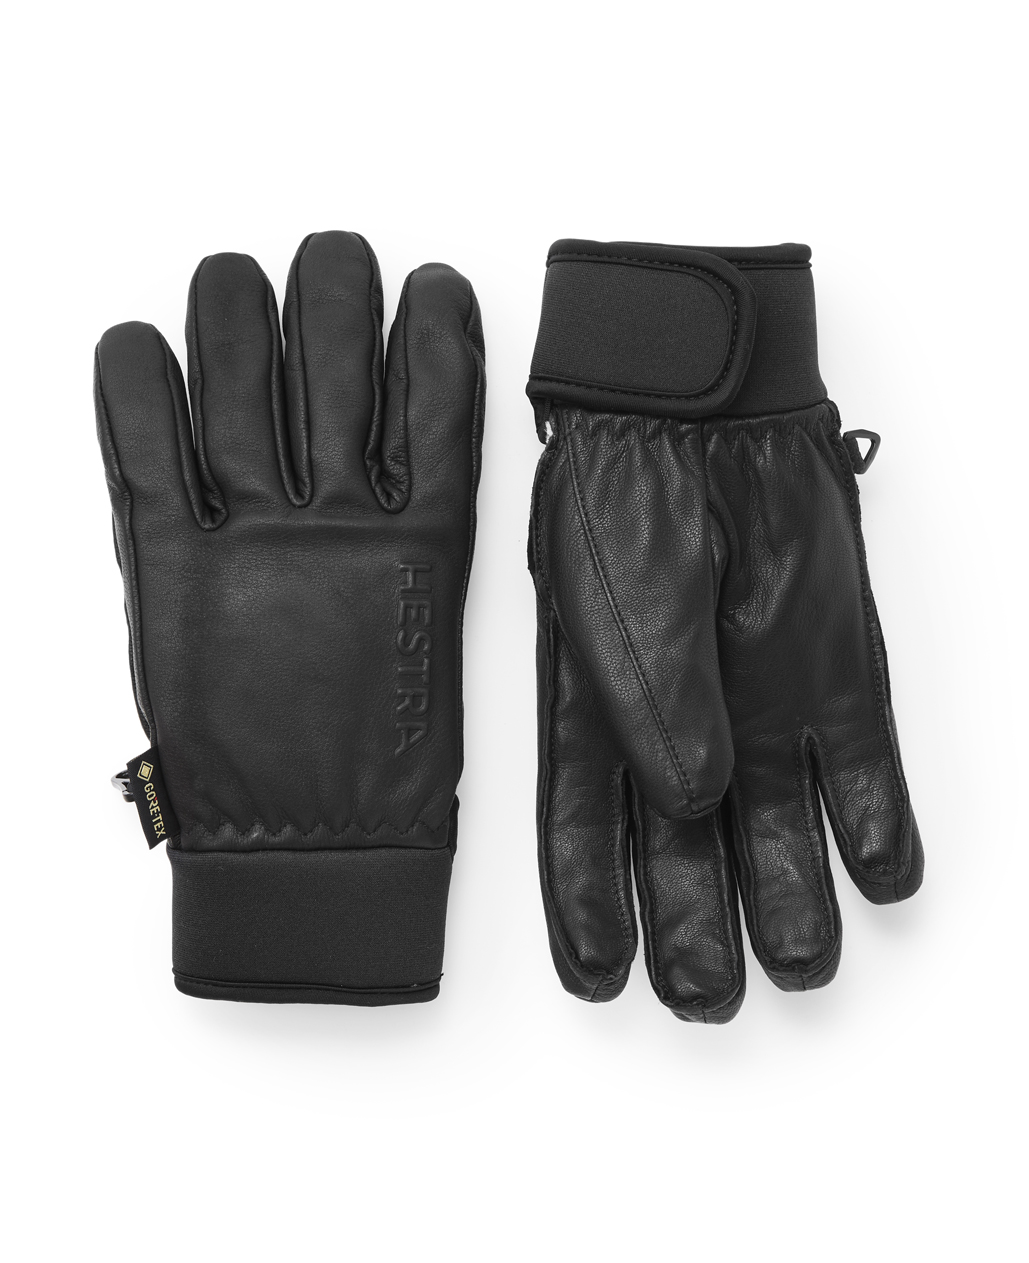 31910 Omni GTX Full Leather | FULLMARKS